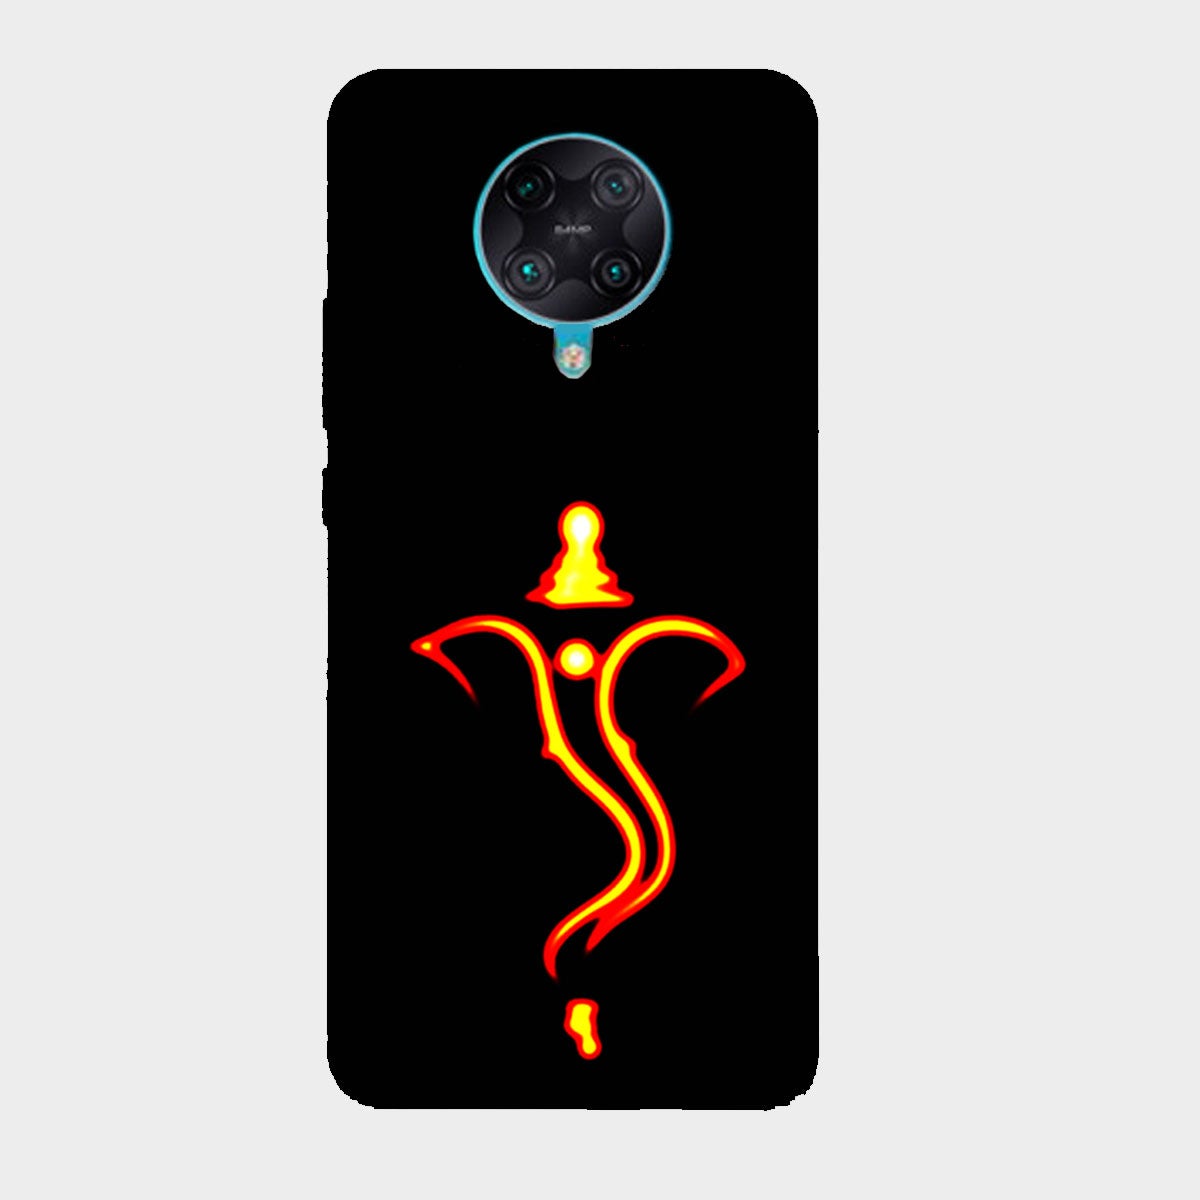 Ganesh - Mobile Phone Cover - Hard Case